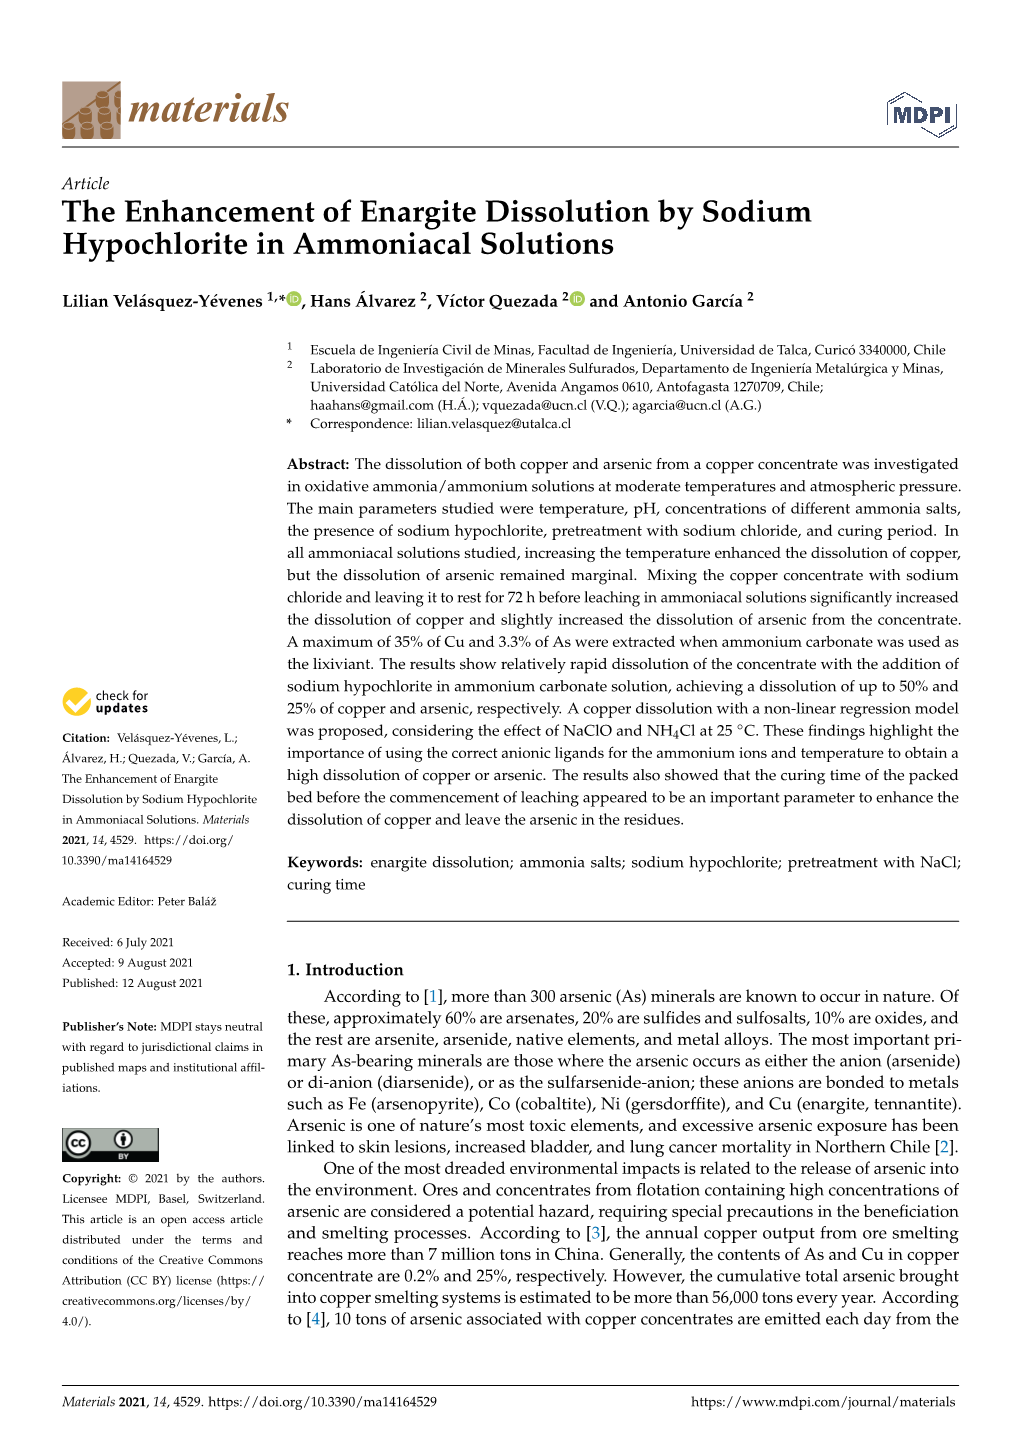 The Enhancement of Enargite Dissolution by Sodium Hypochlorite in Ammoniacal Solutions